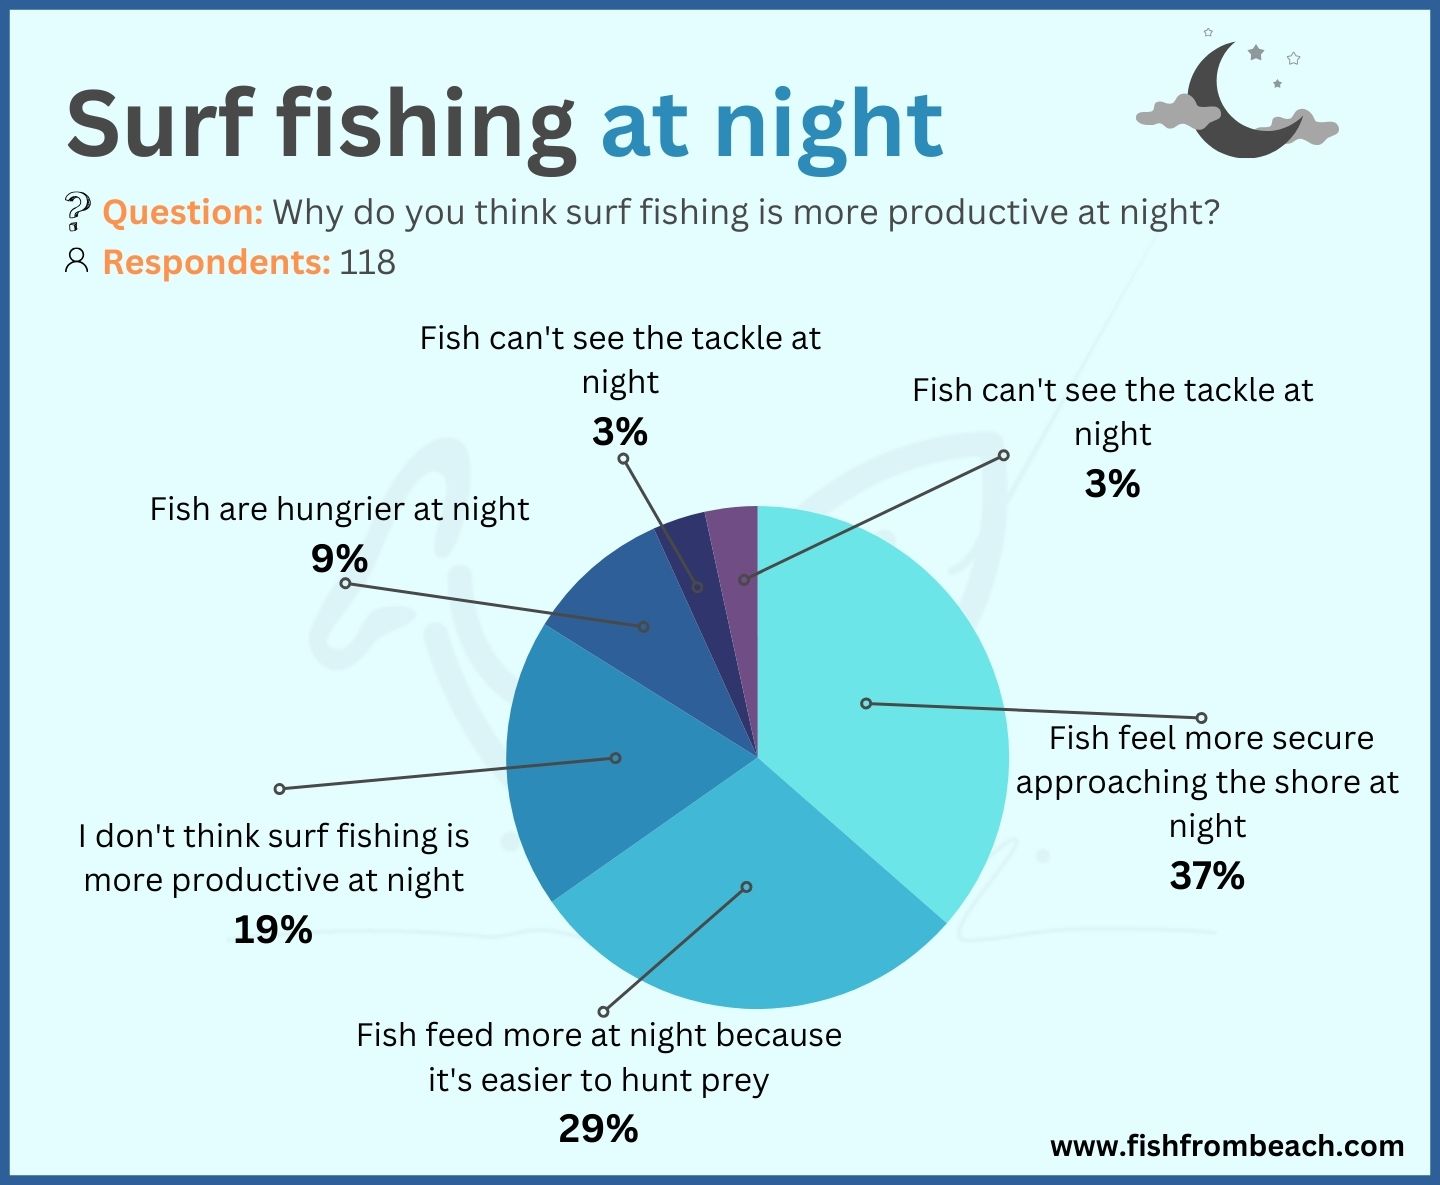 Several reasons why surf anglers prefer night fishing